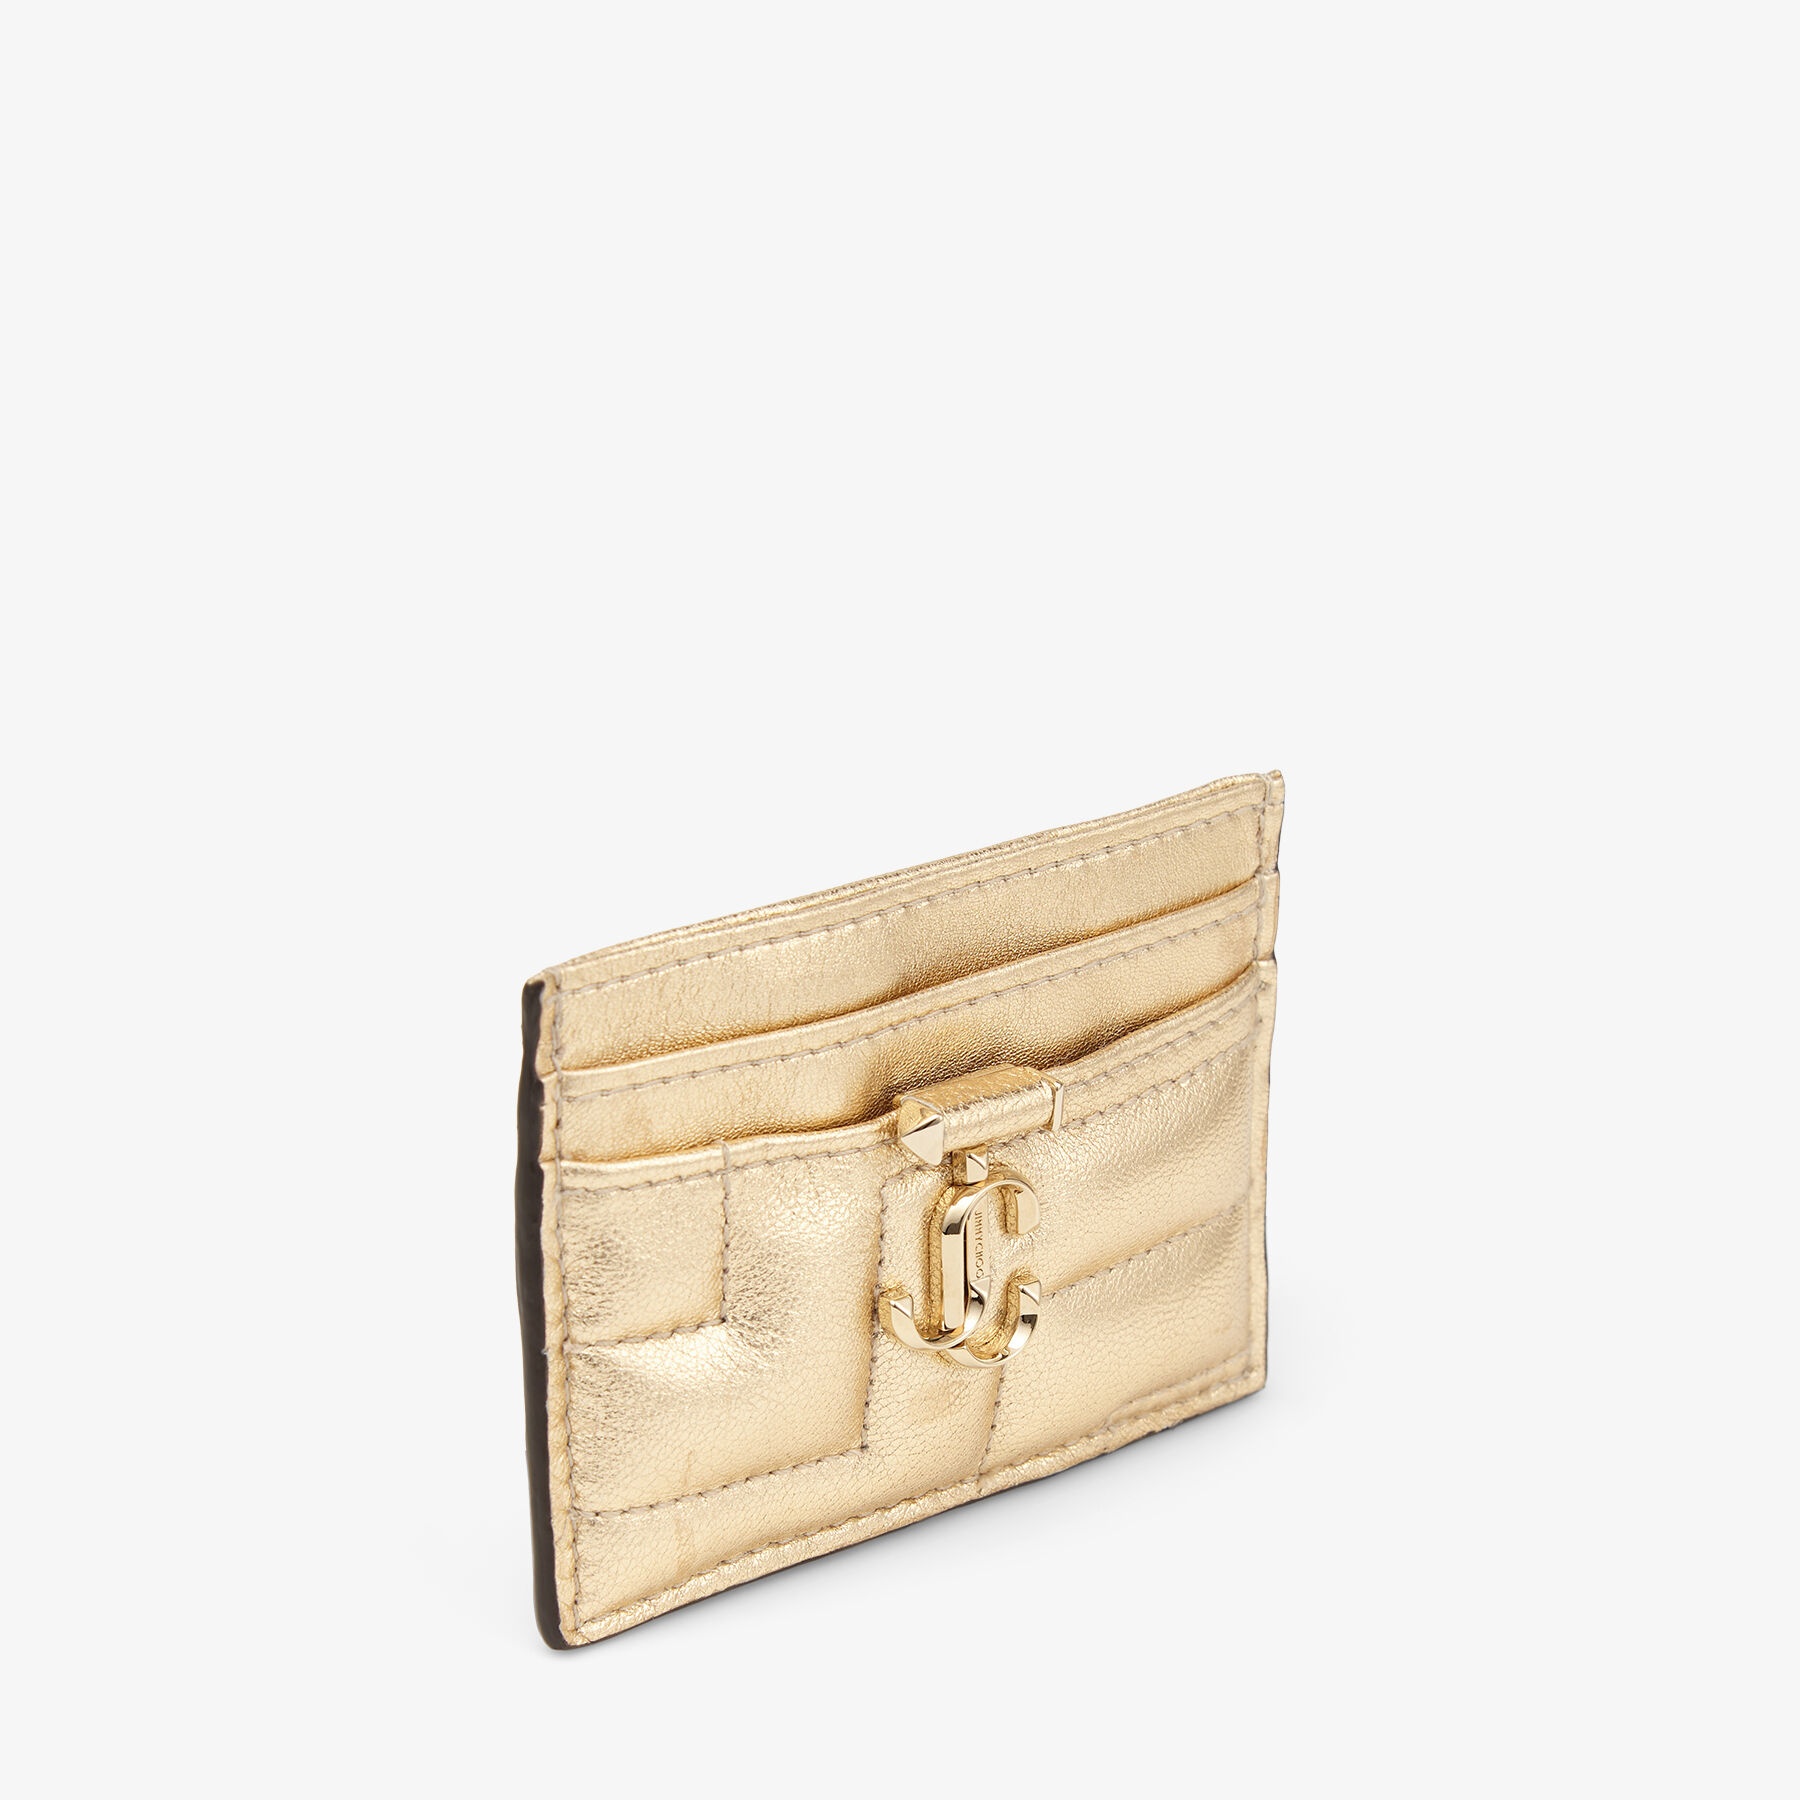 Umika Avenue
Gold Avenue Metallic Nappa Leather Card Holder with JC Emblem - 2